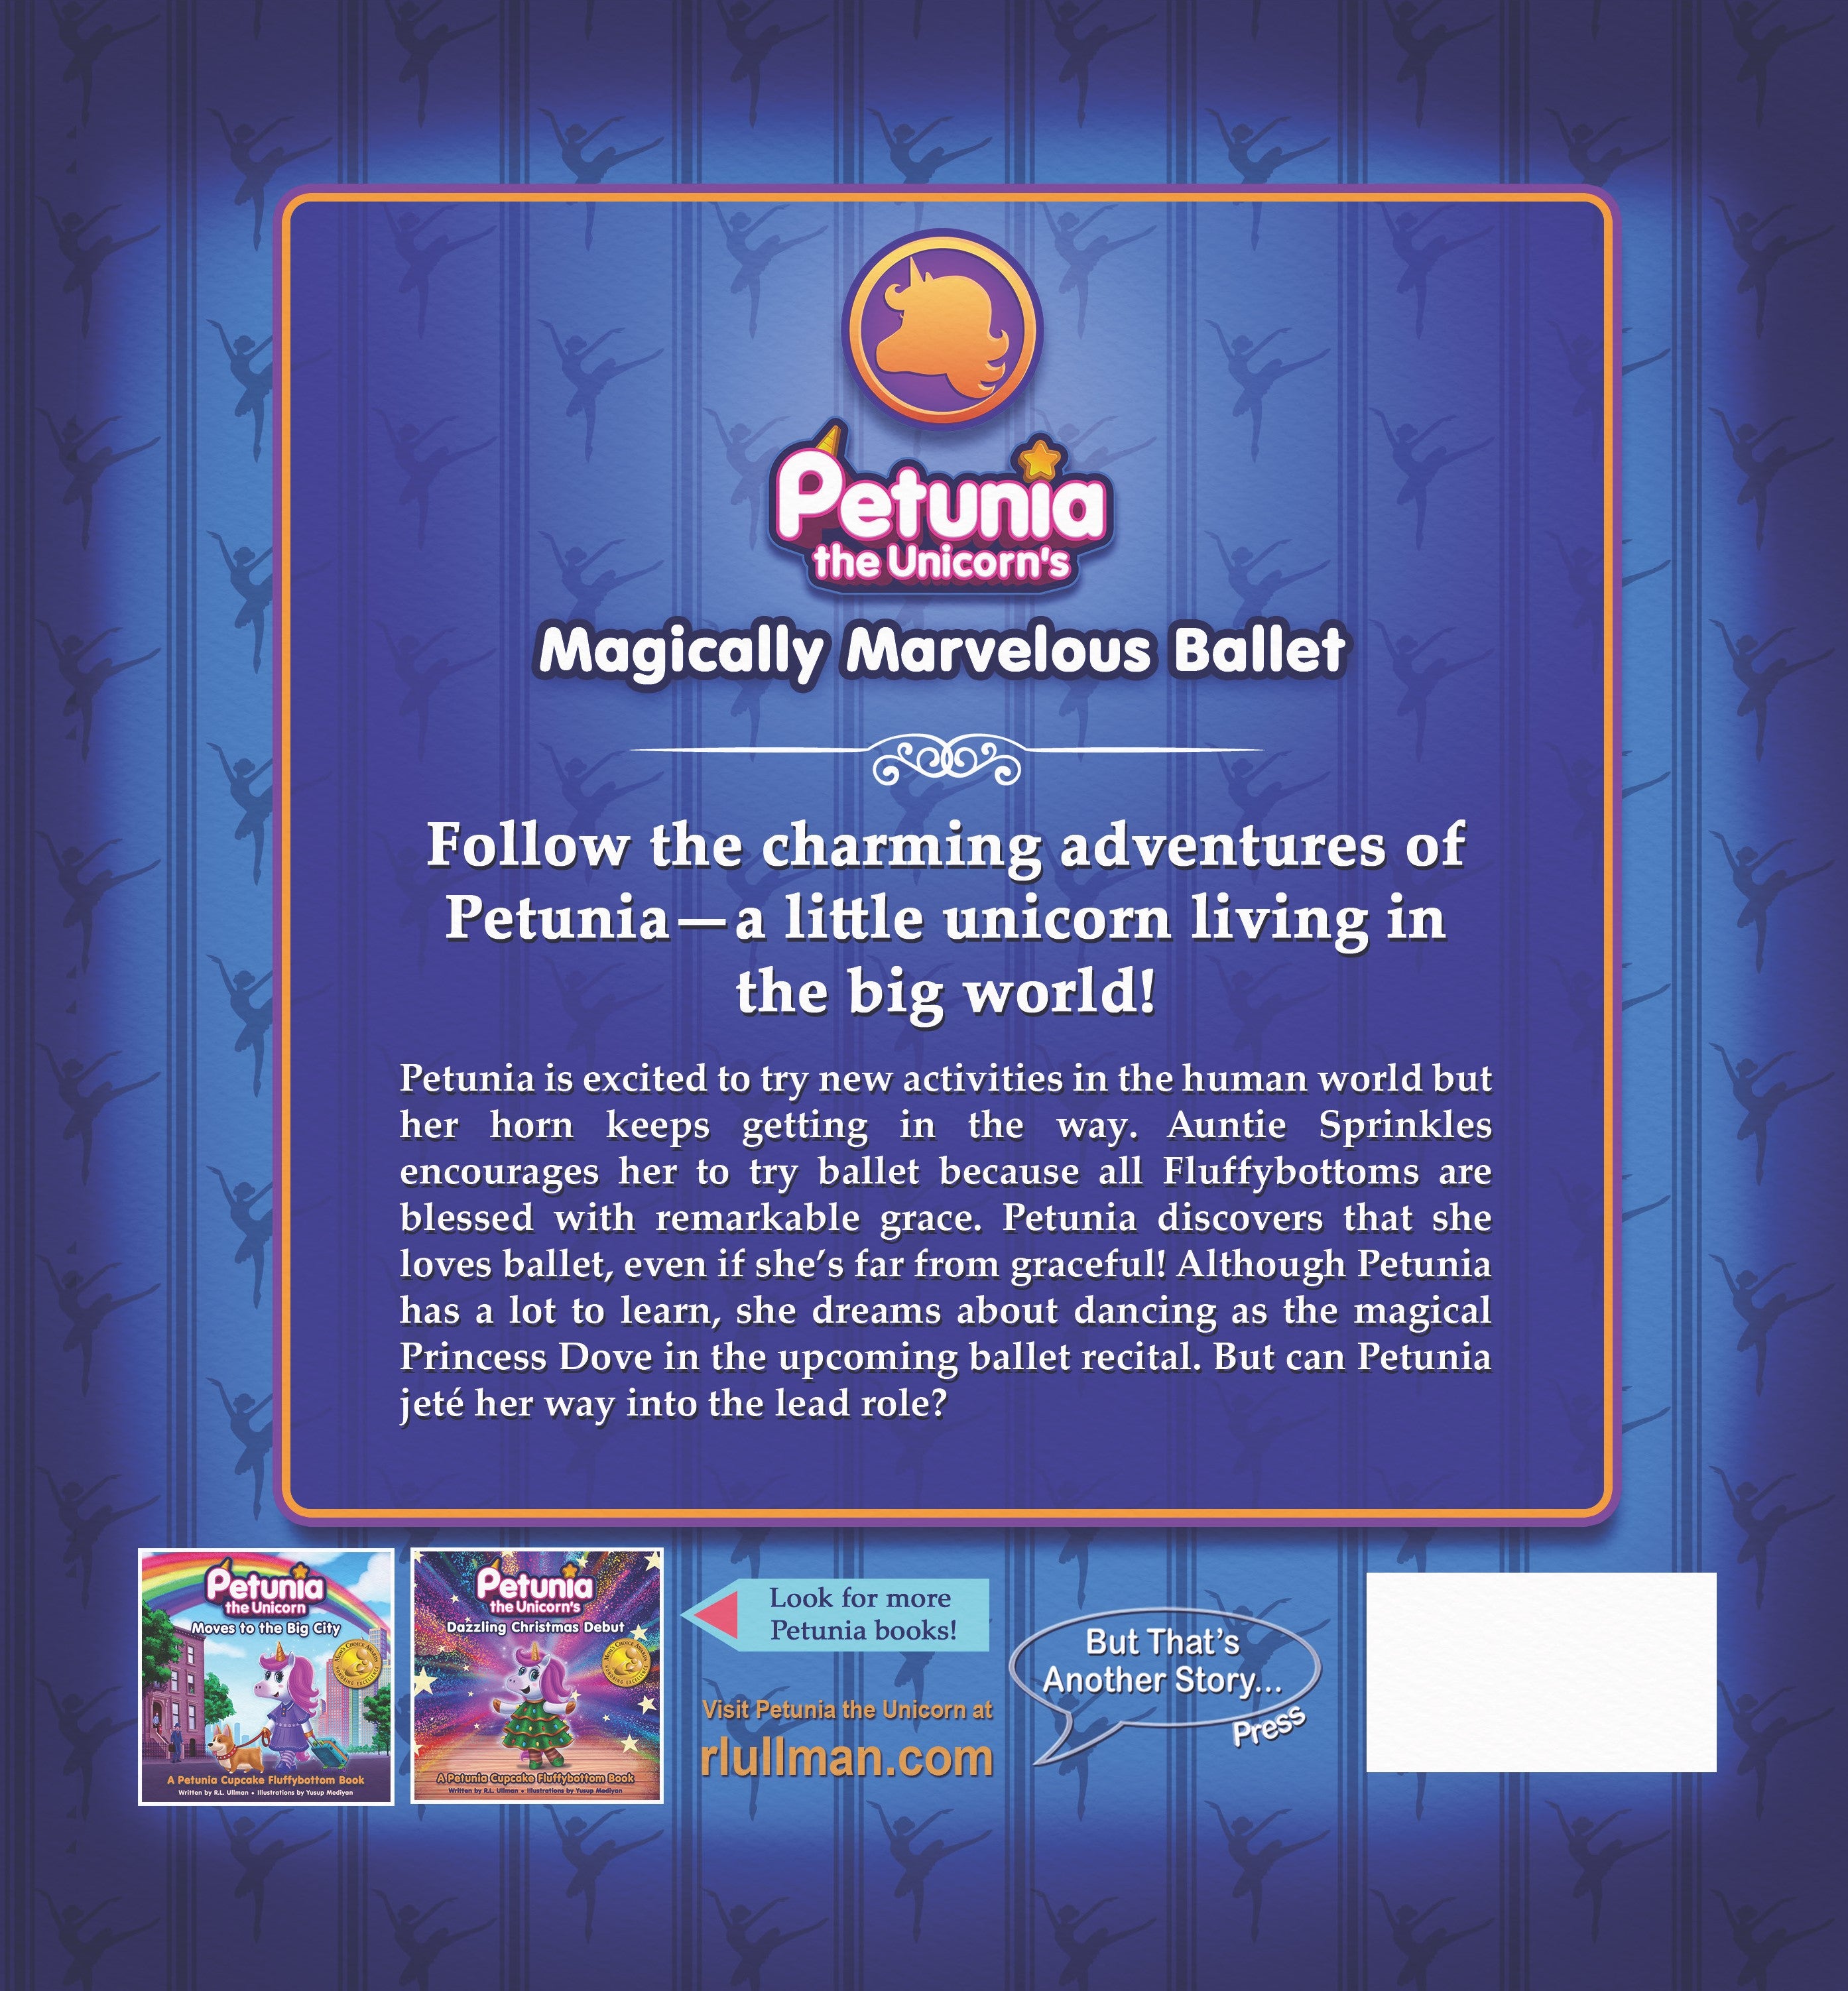 Petunia the Unicorn's Magically Marvelous Ballet (Hardcover)